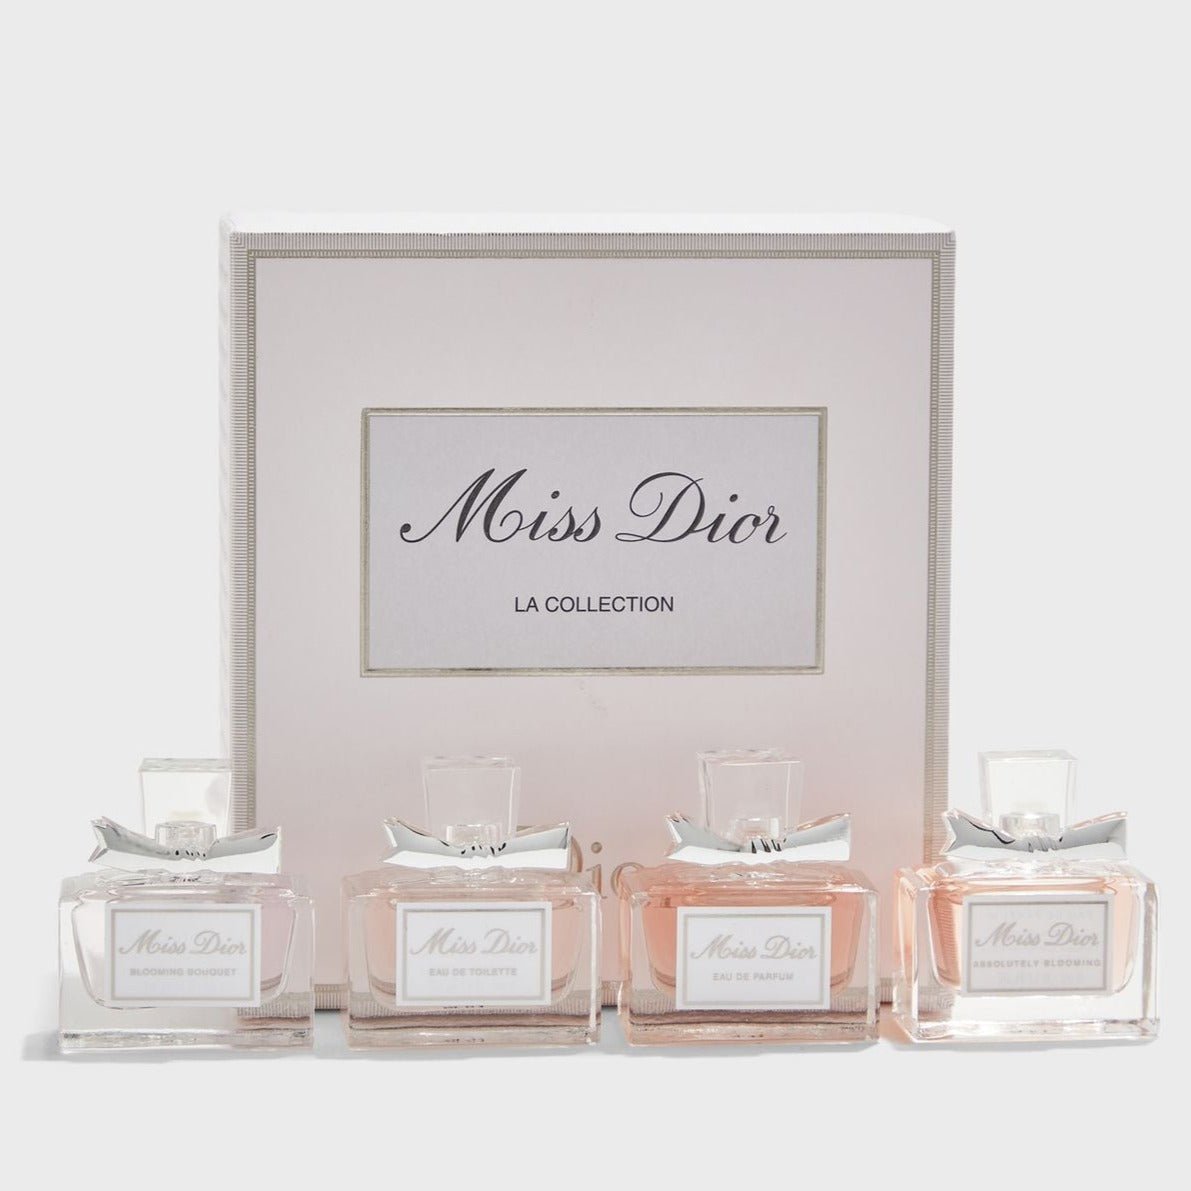 Maison Christian Dior Fragrance Discovery Set 8 Fragrances  DIOR